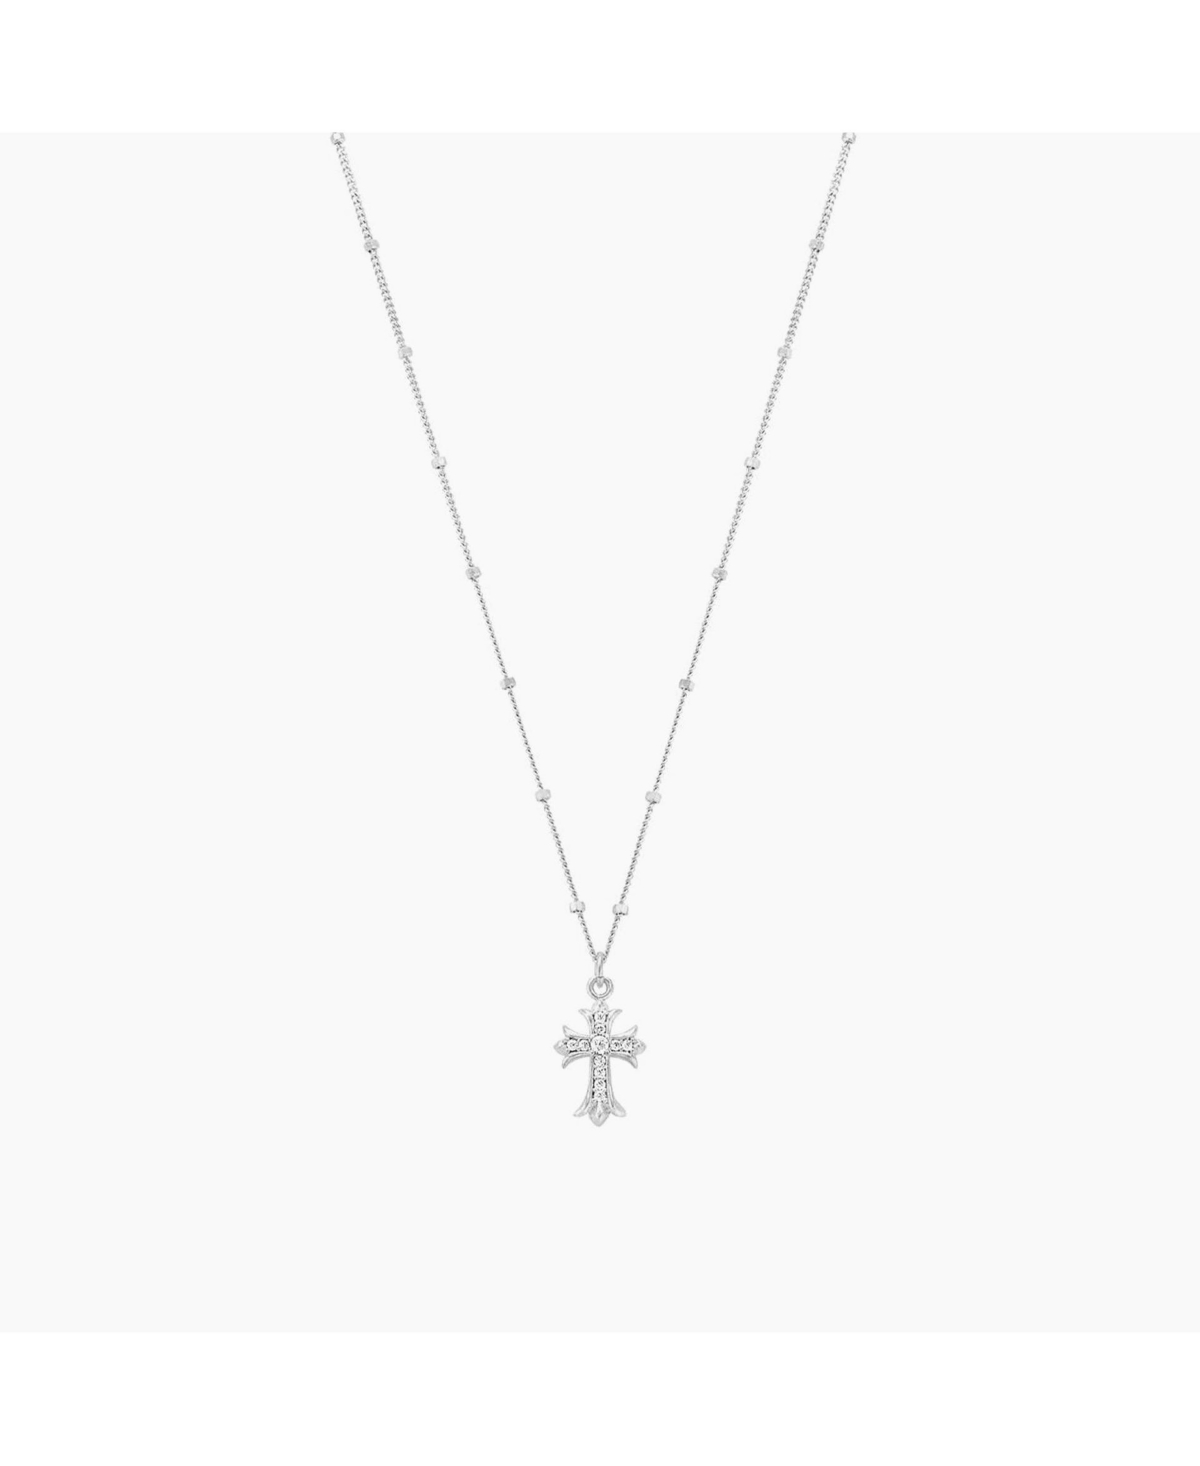 Isla Cross Necklace - White gold